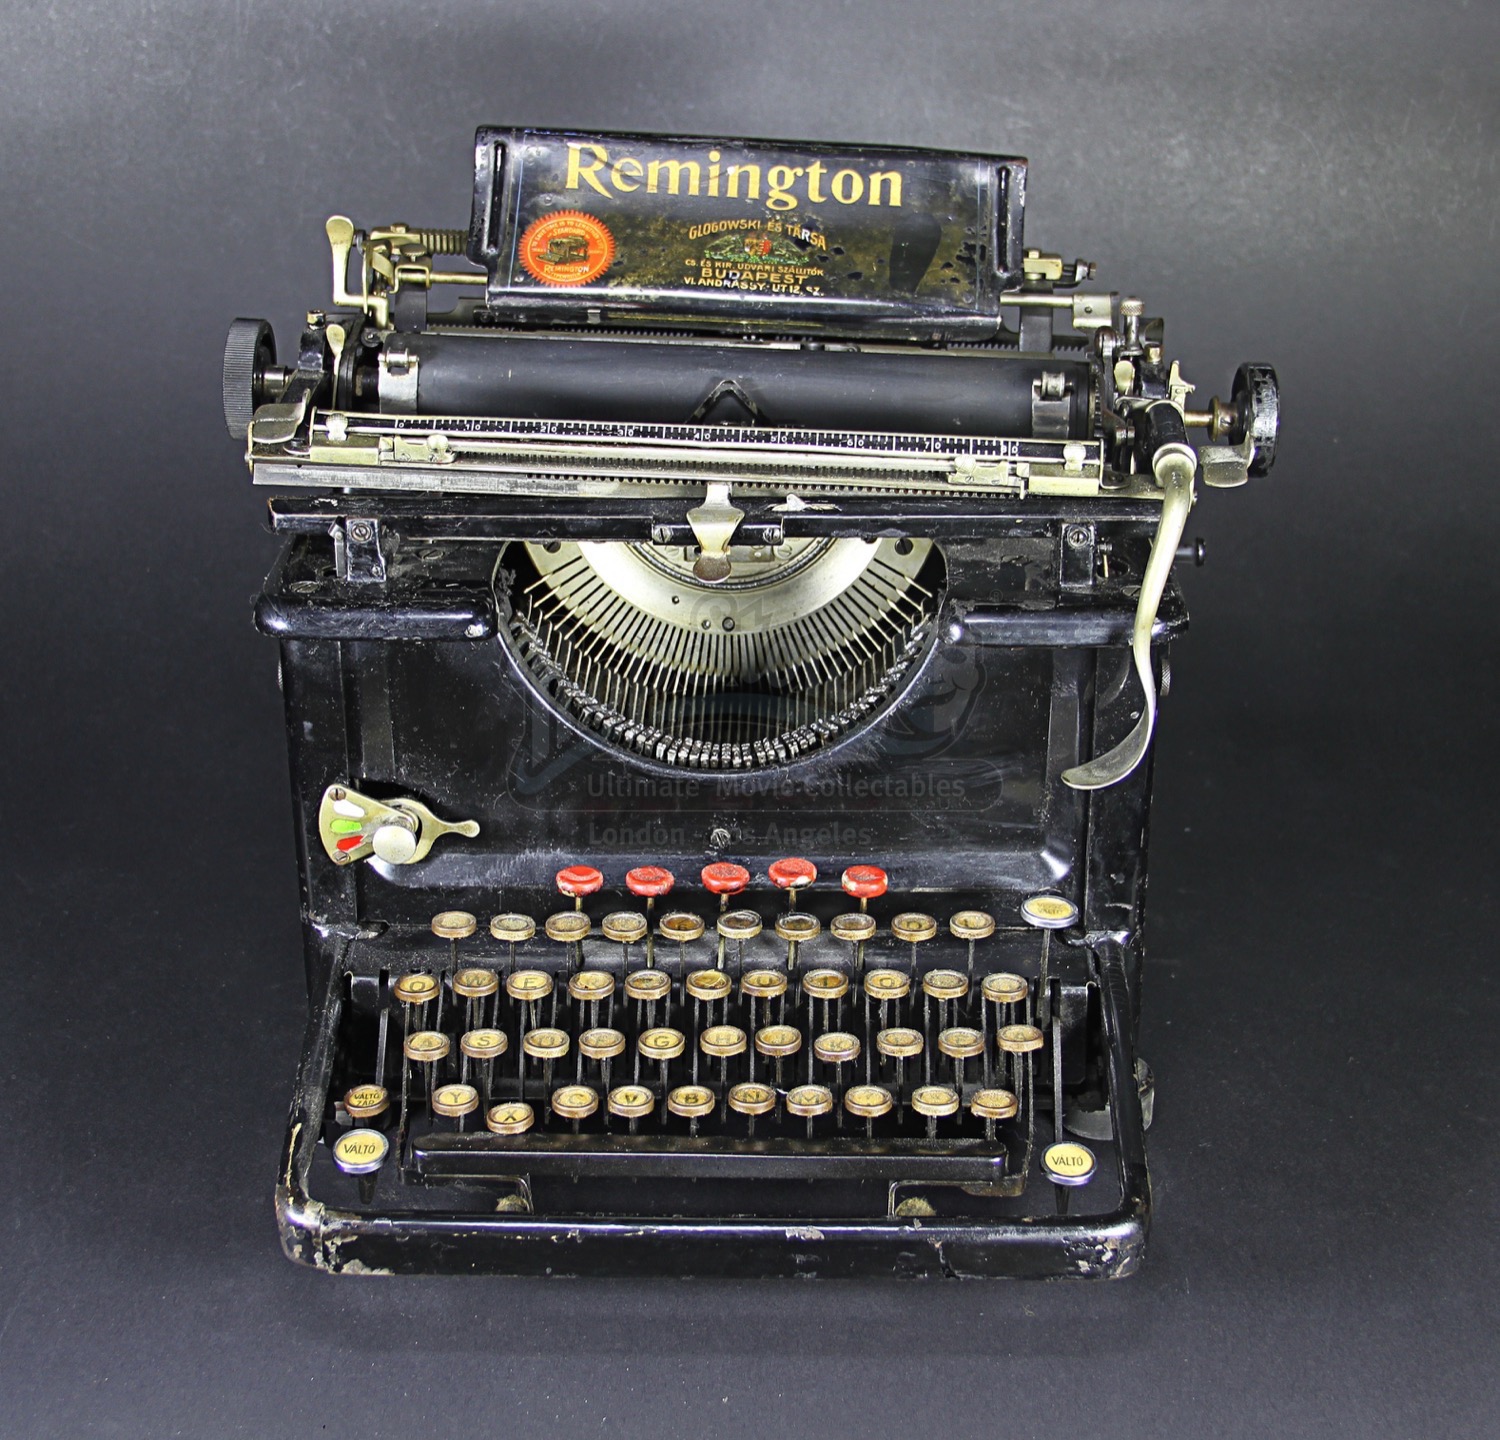 value of old typewriters